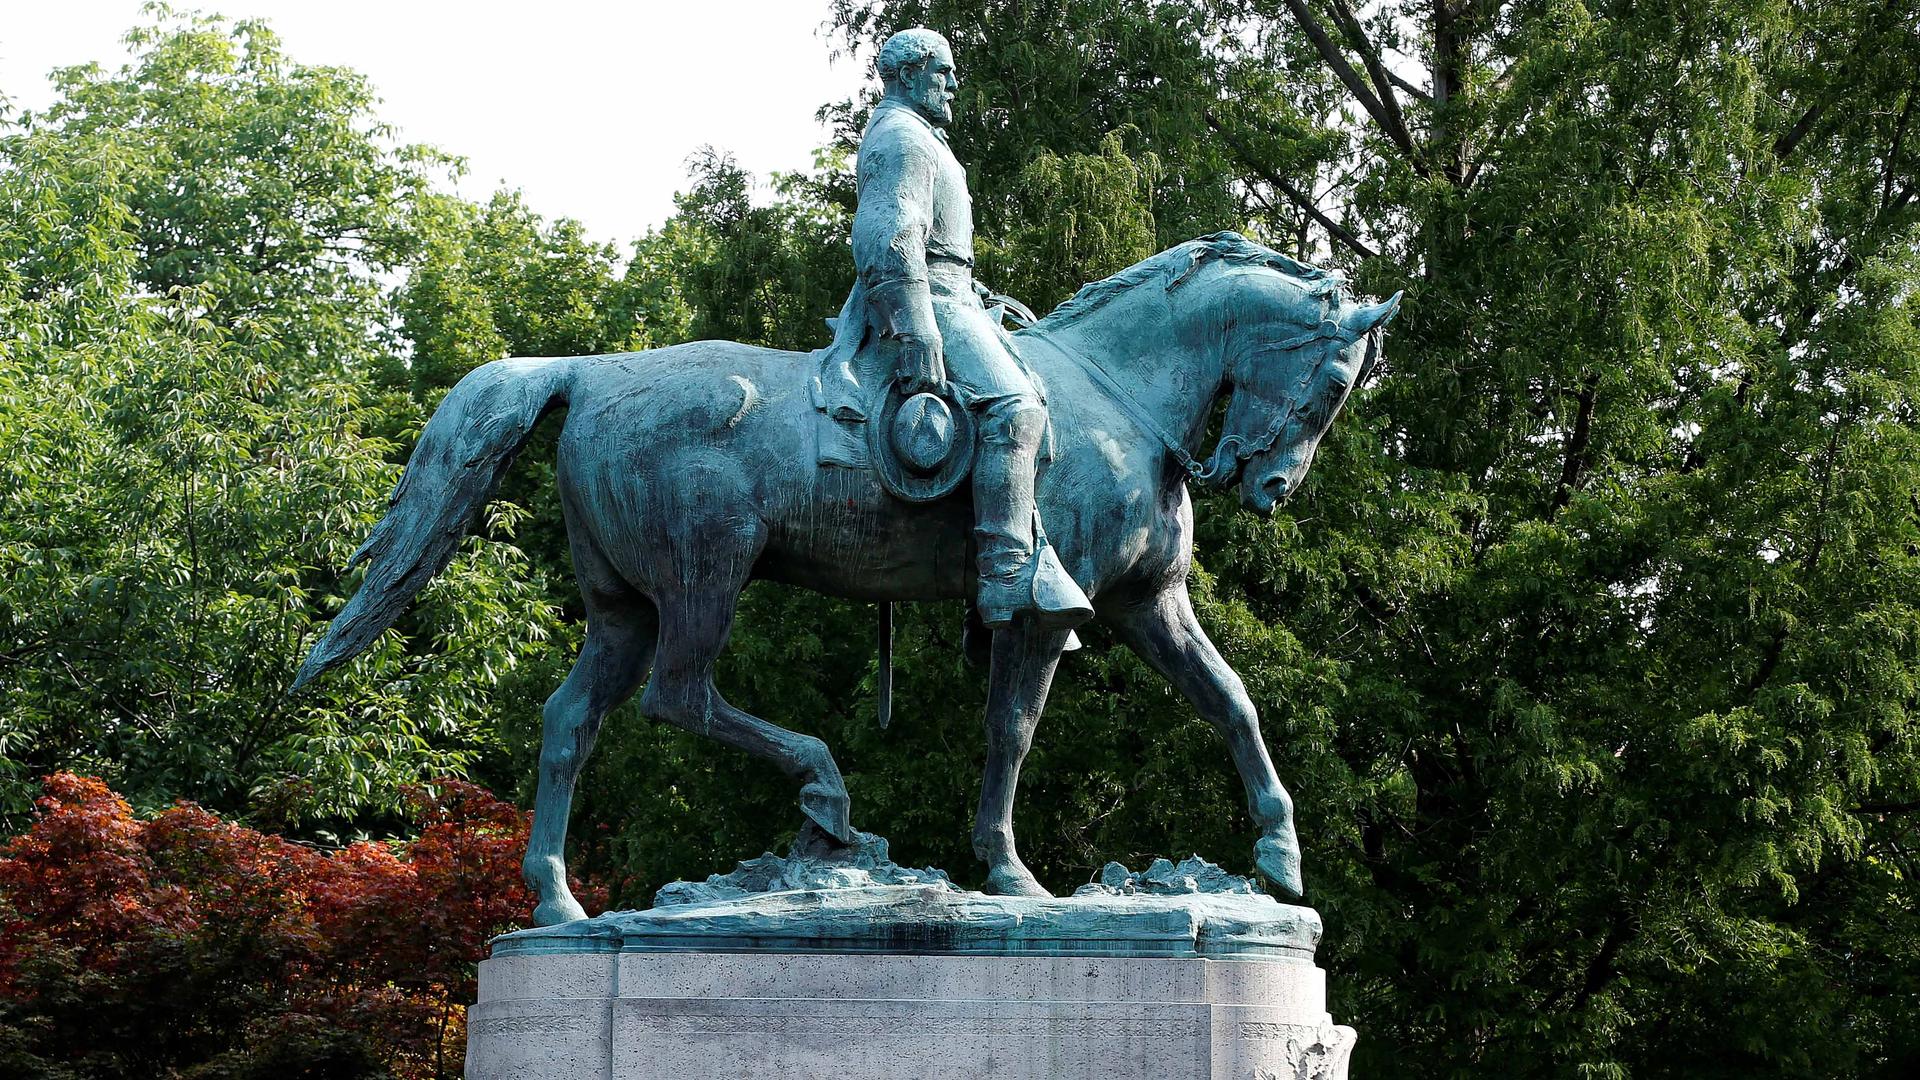 A Robert E. Lee statue in Charlottesville, Virginia.